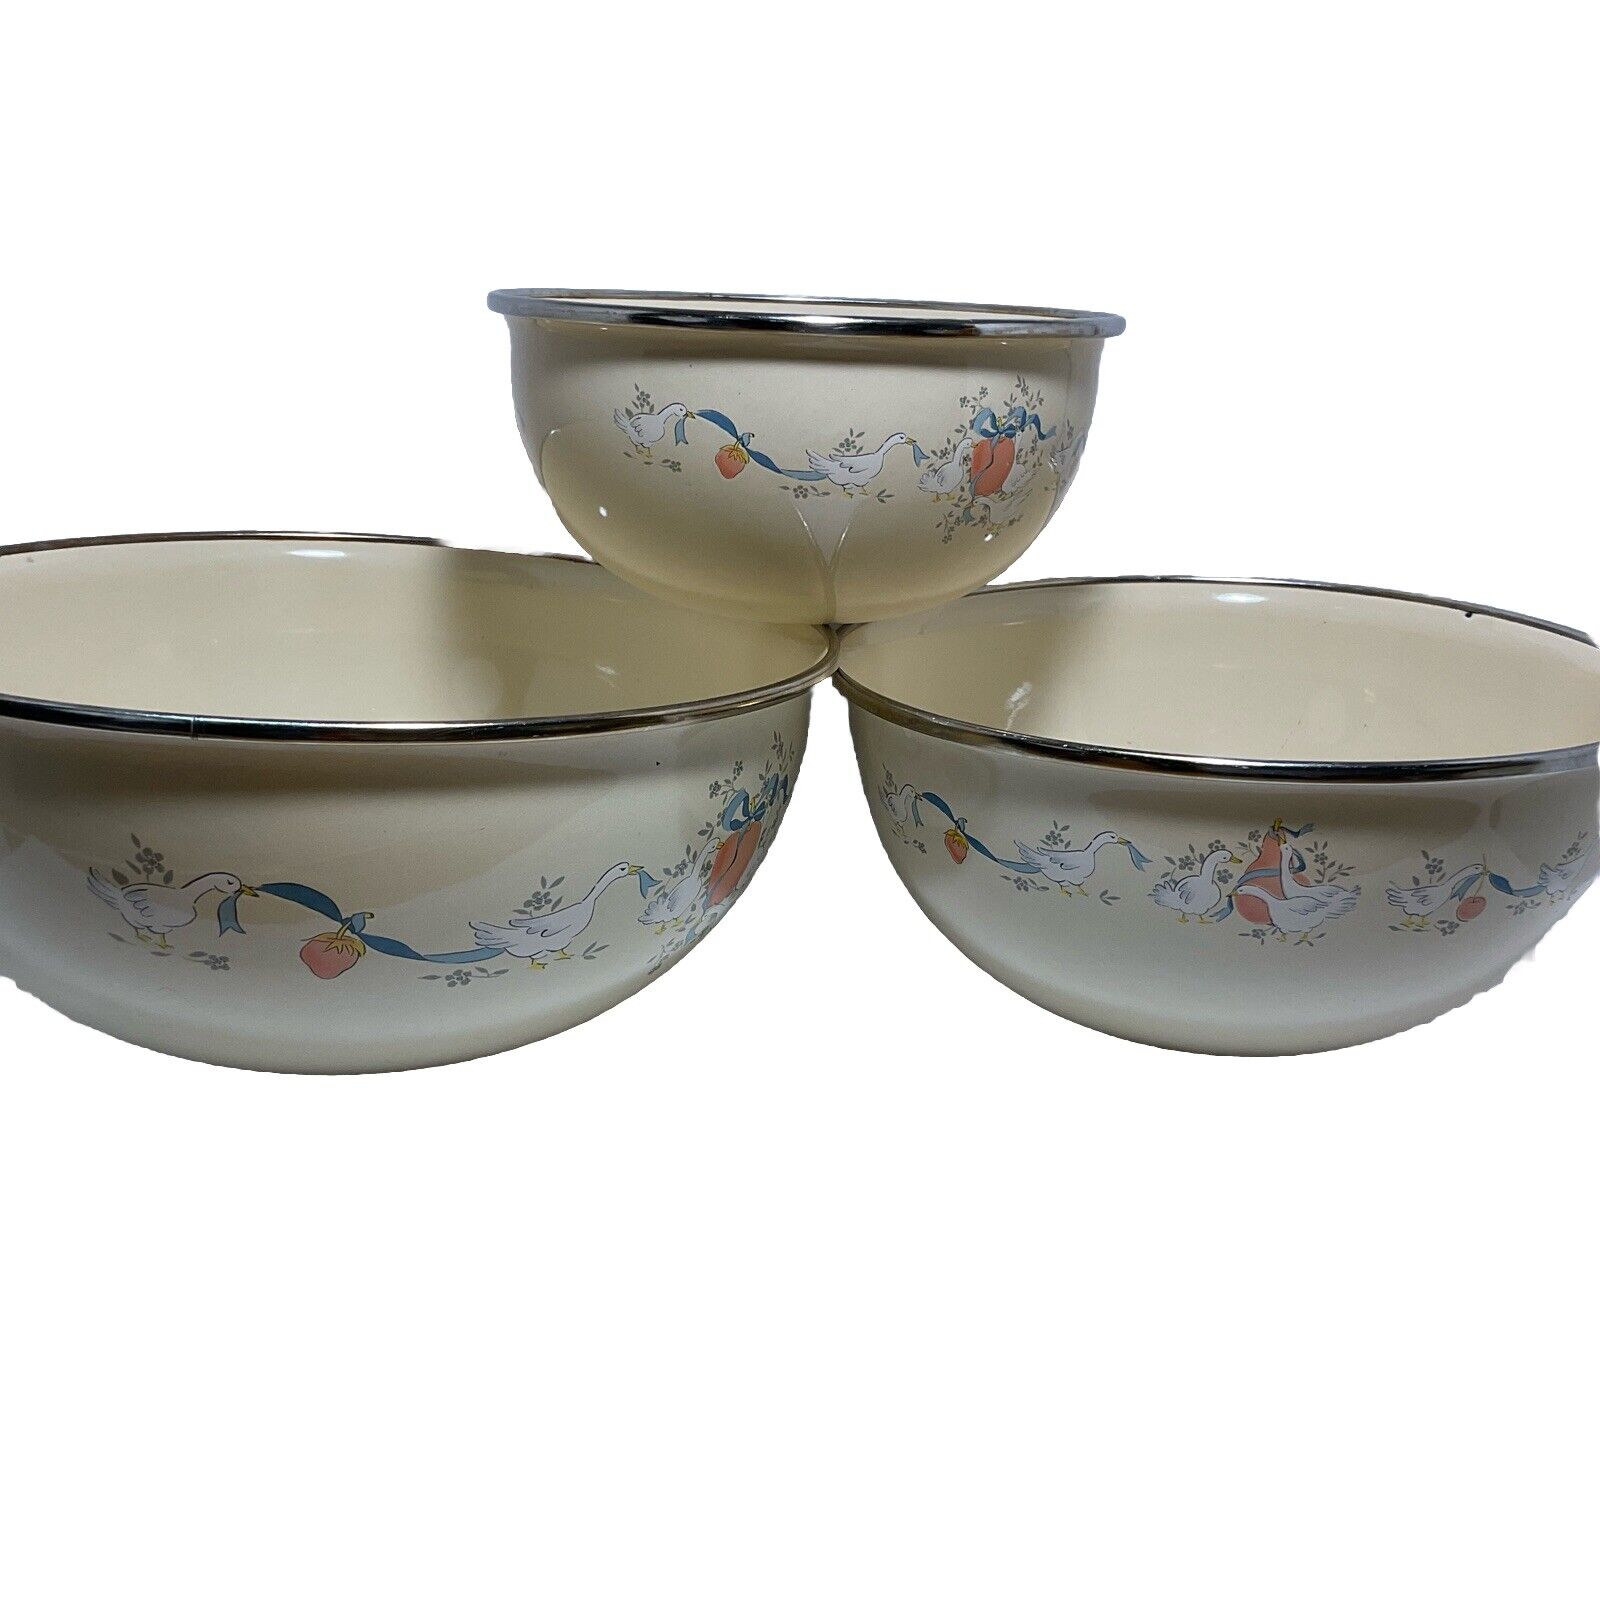 Vintage Country Geese Enamelware Nesting Mixing Bowl Set- Three Bowls